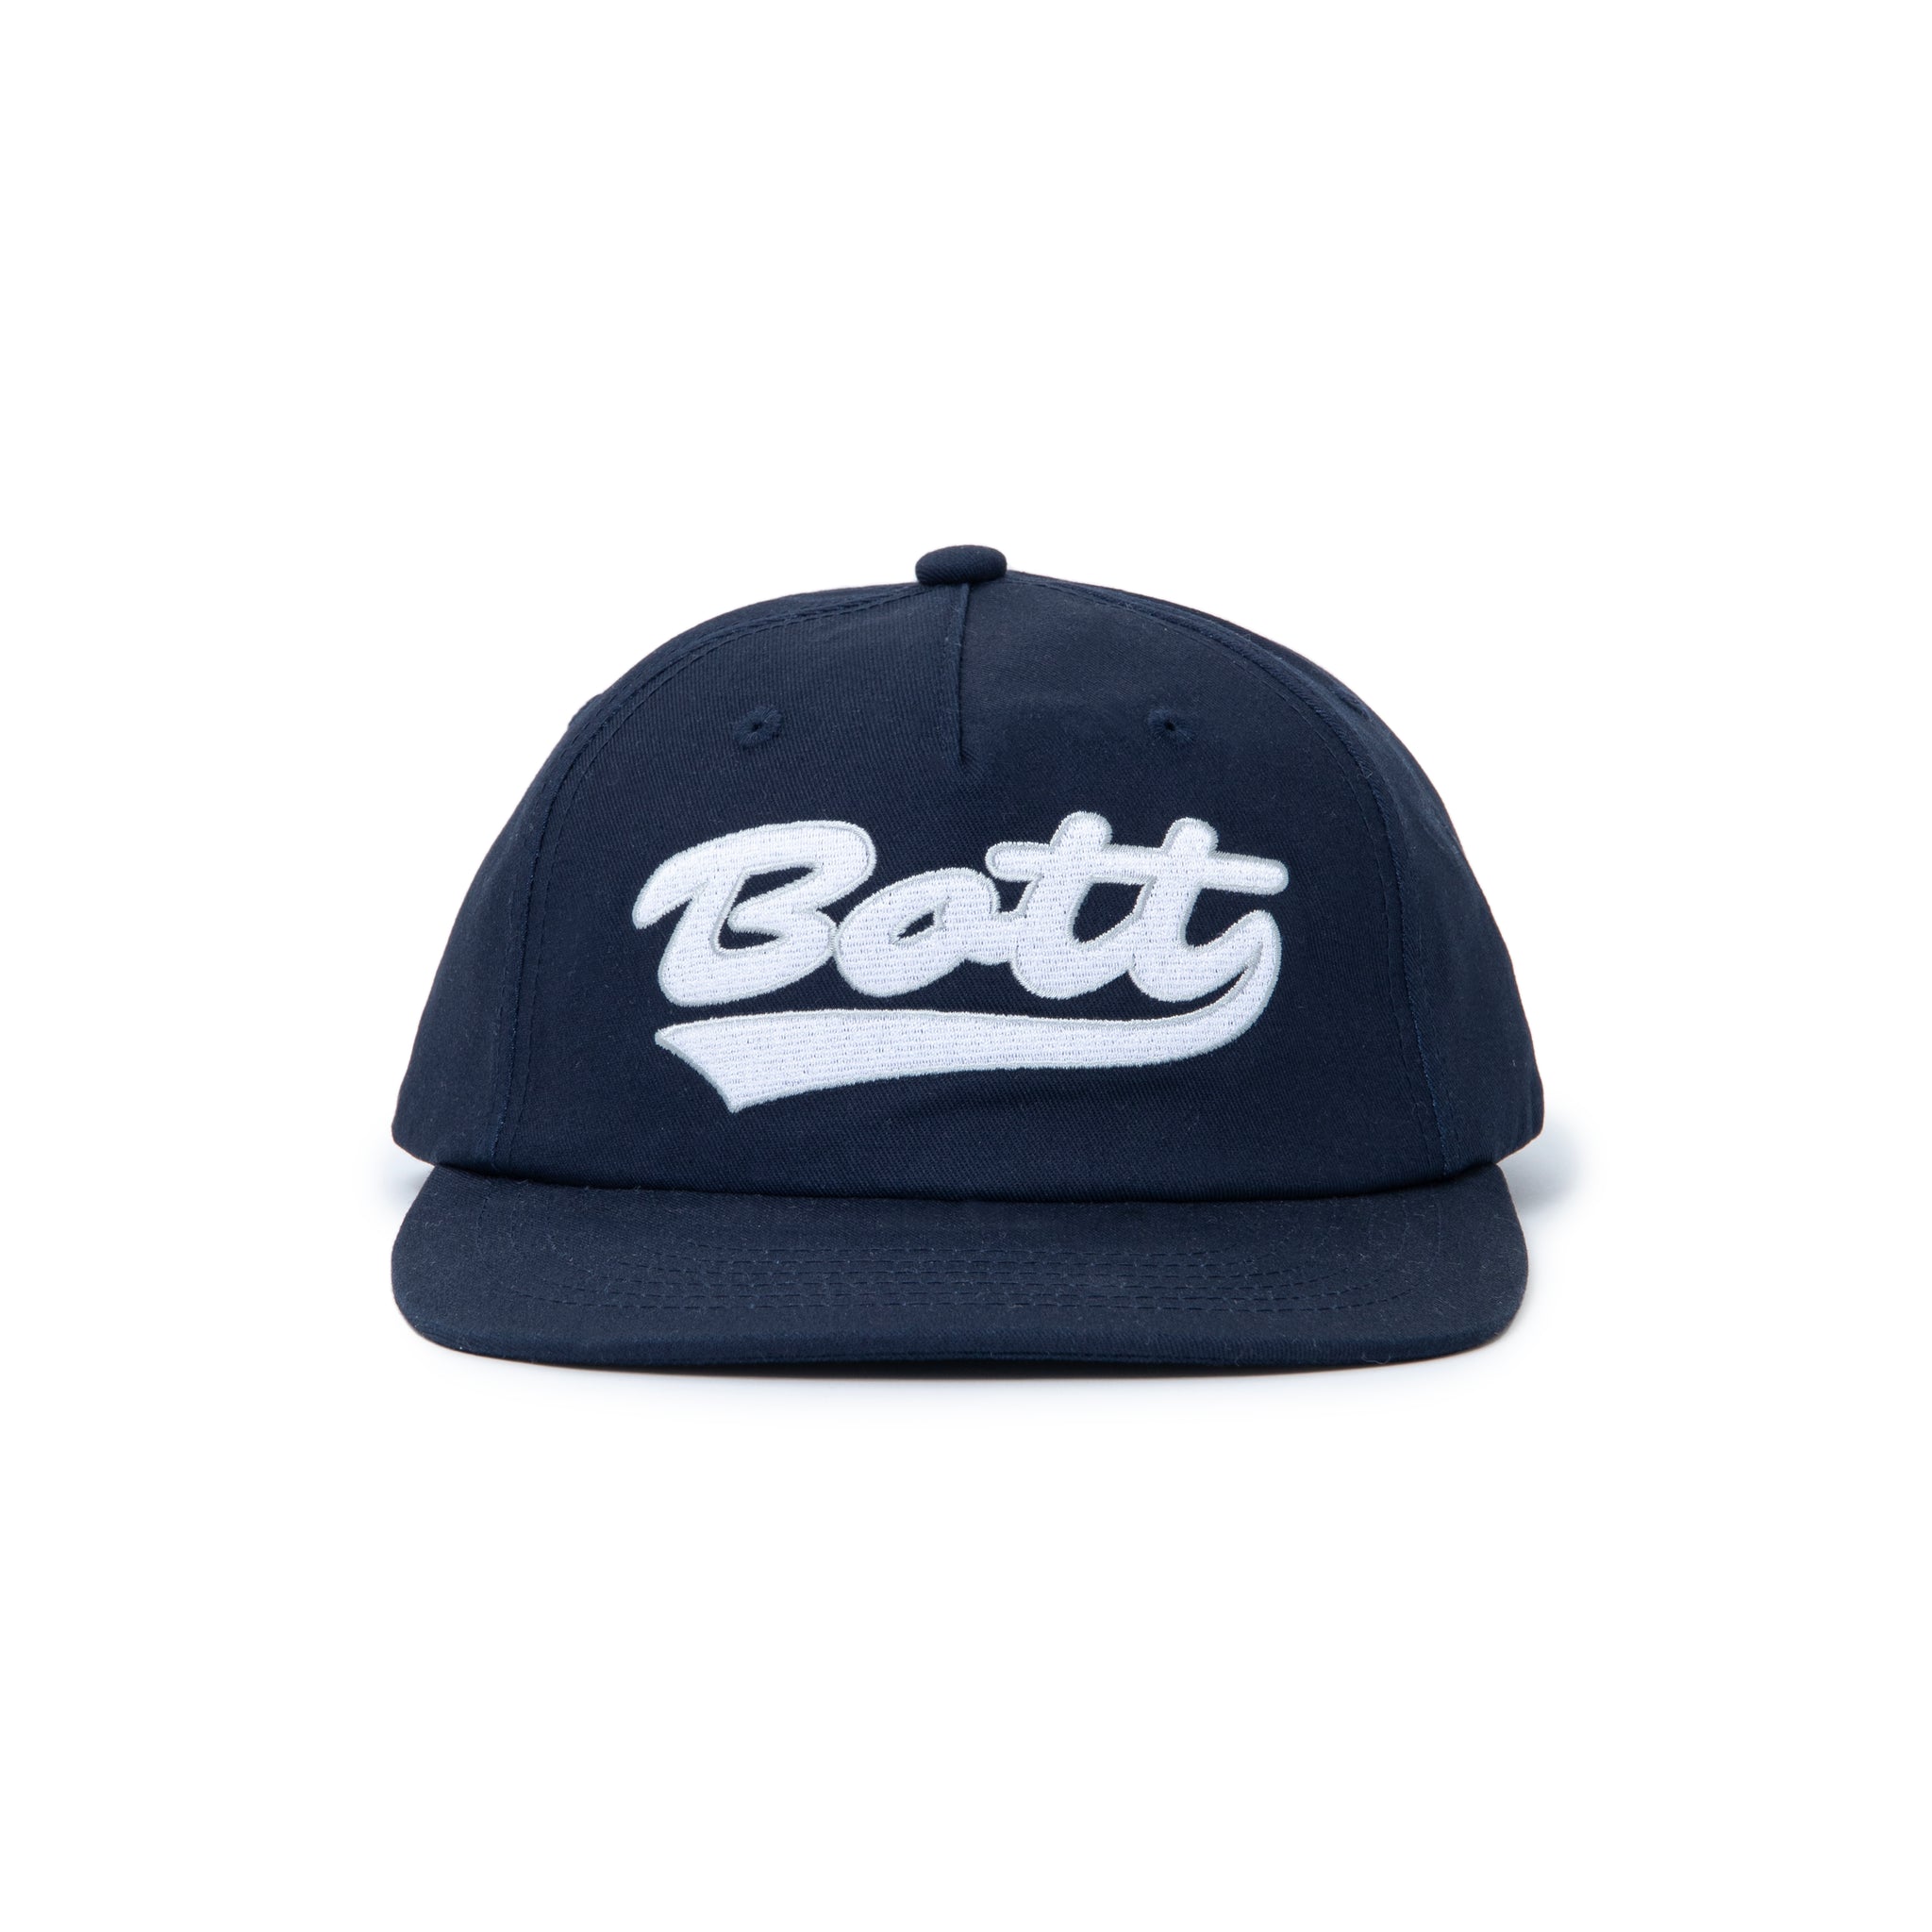 BoTT ボット / Script Logo 5Panel Cap (Navy) のオンライン通販